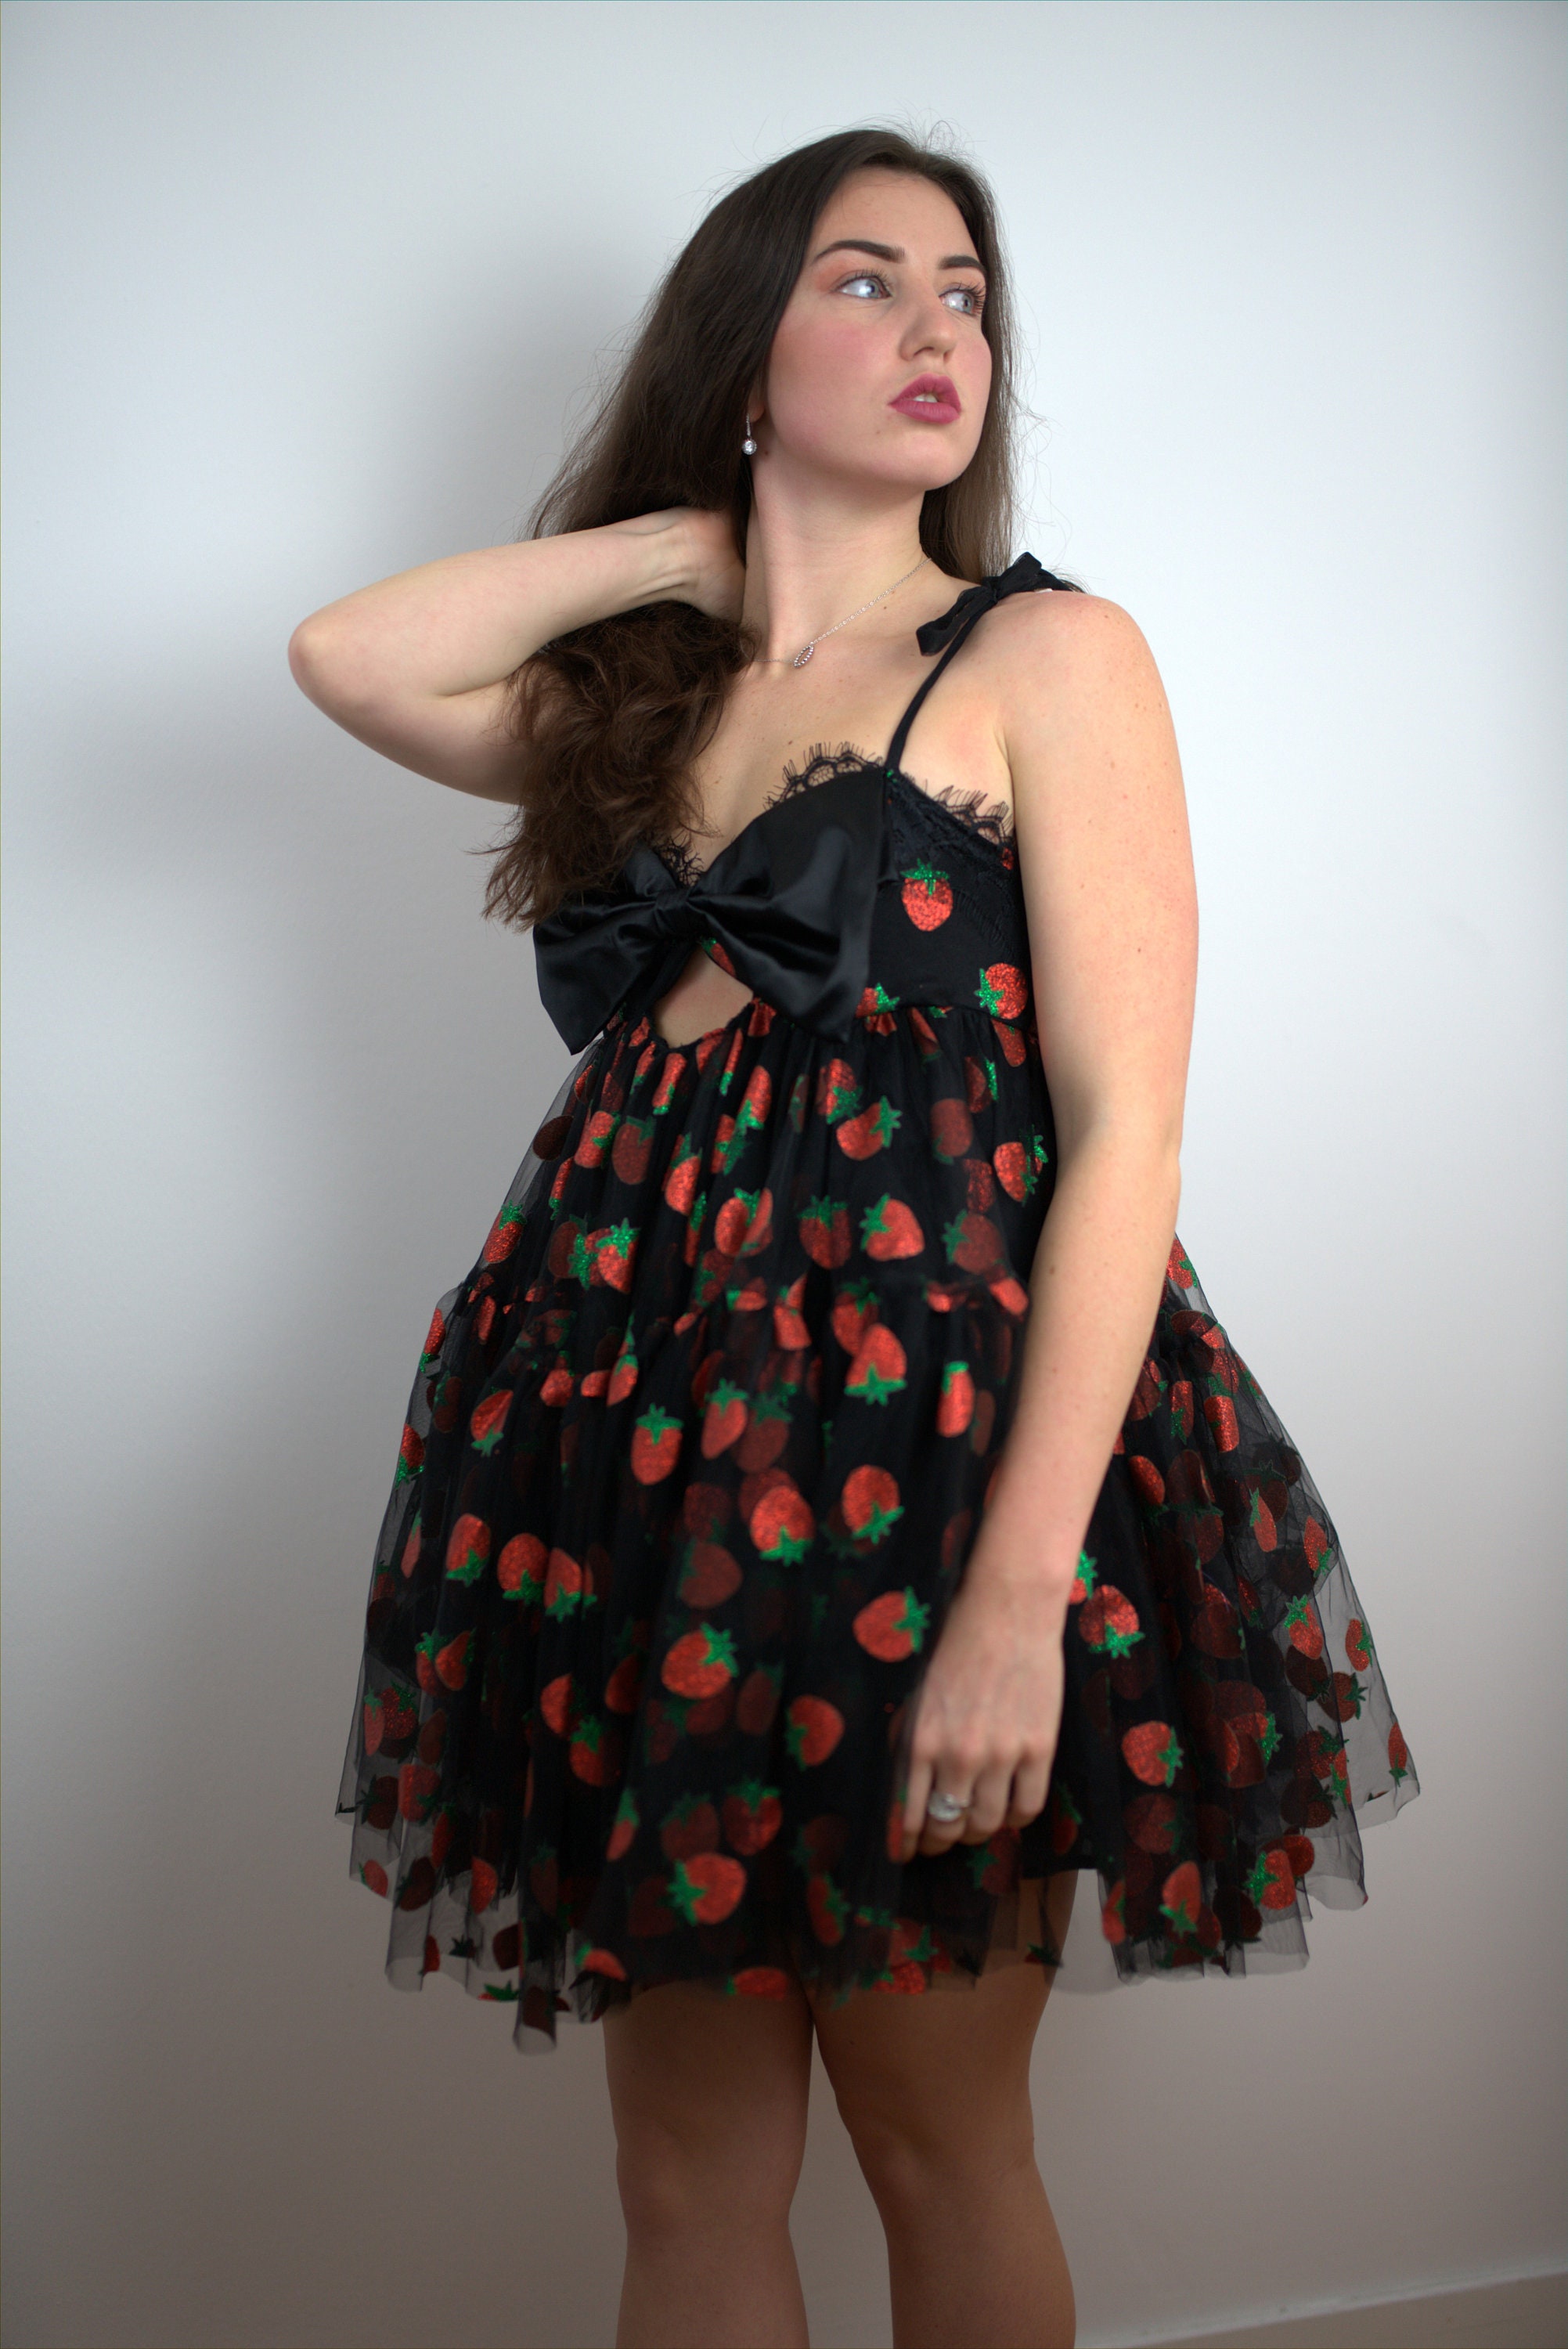 strawberry dress and black dress